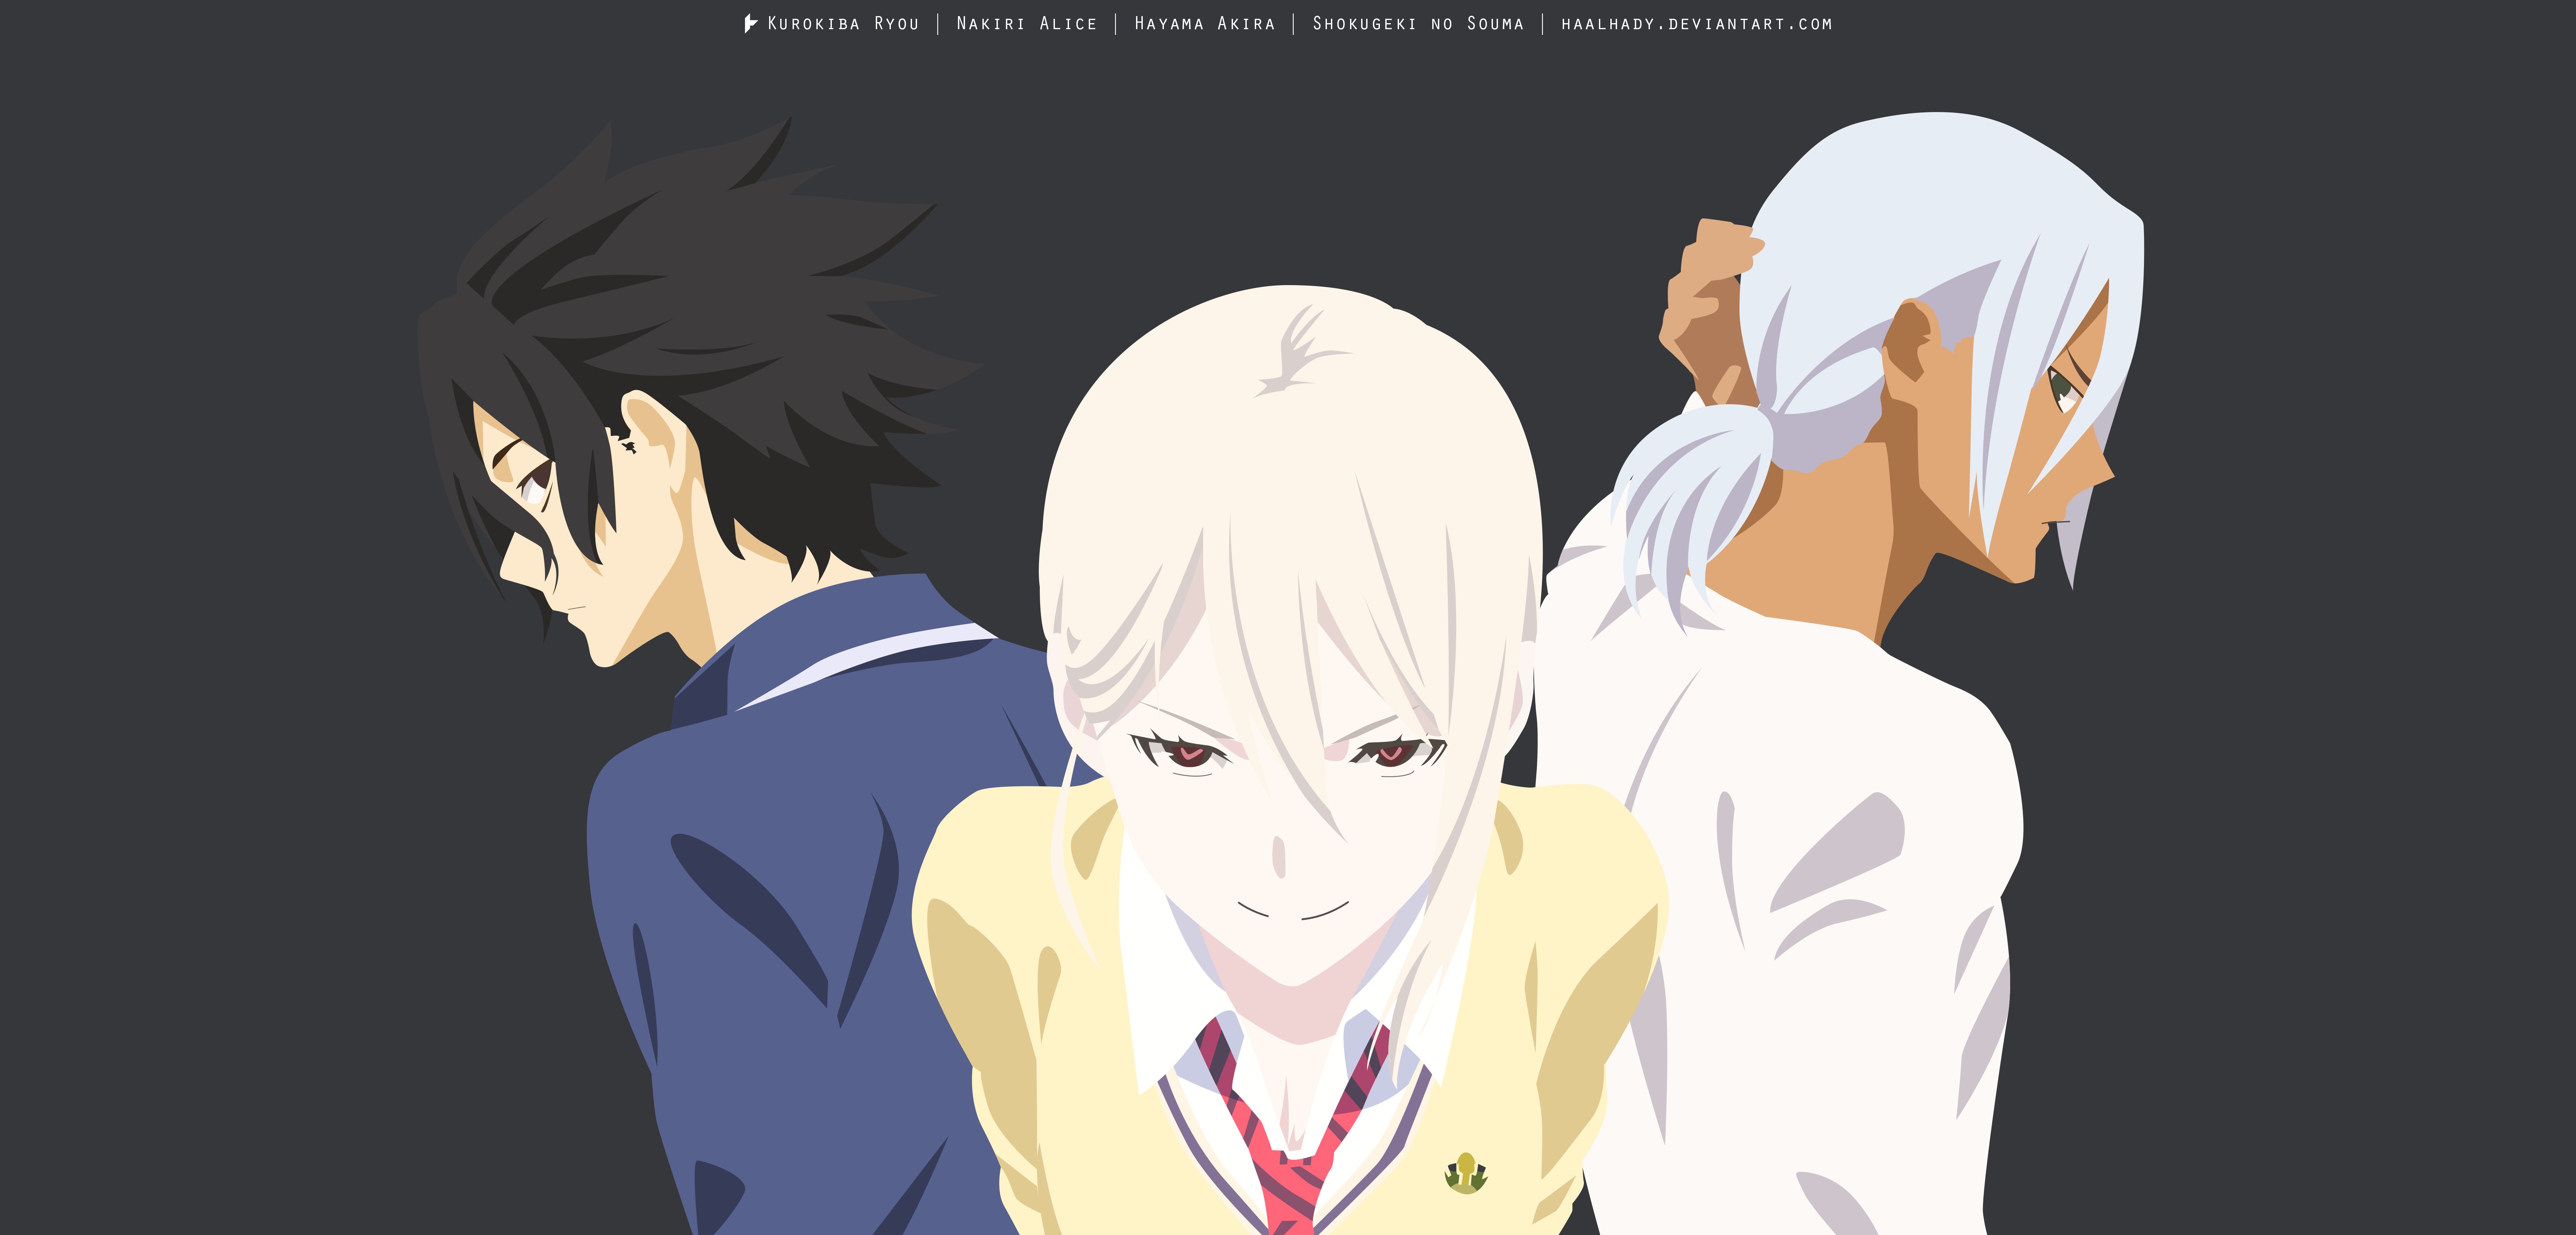 907846 Hintergrundbild herunterladen animes, essenskriege: shokugeki no soma, akira hayama, alice nakiri, ryō kurokiba - Bildschirmschoner und Bilder kostenlos